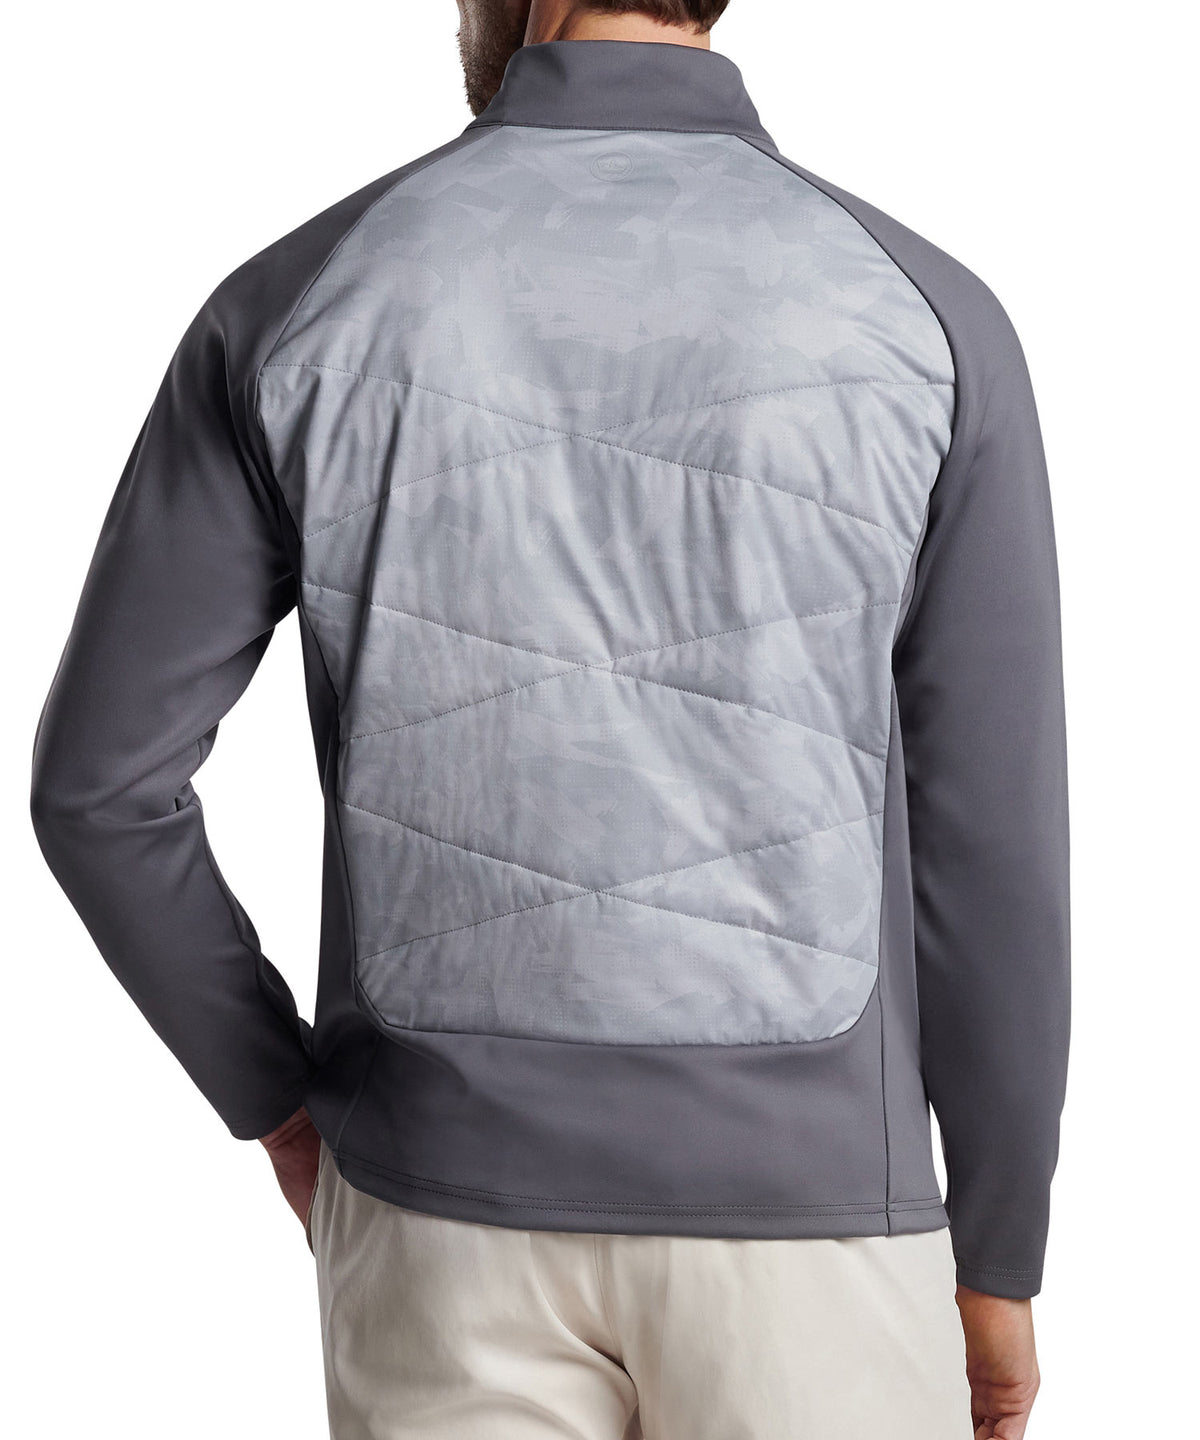 Peter Millar Endeavor Hybrid Jacket, Men's Big & Tall